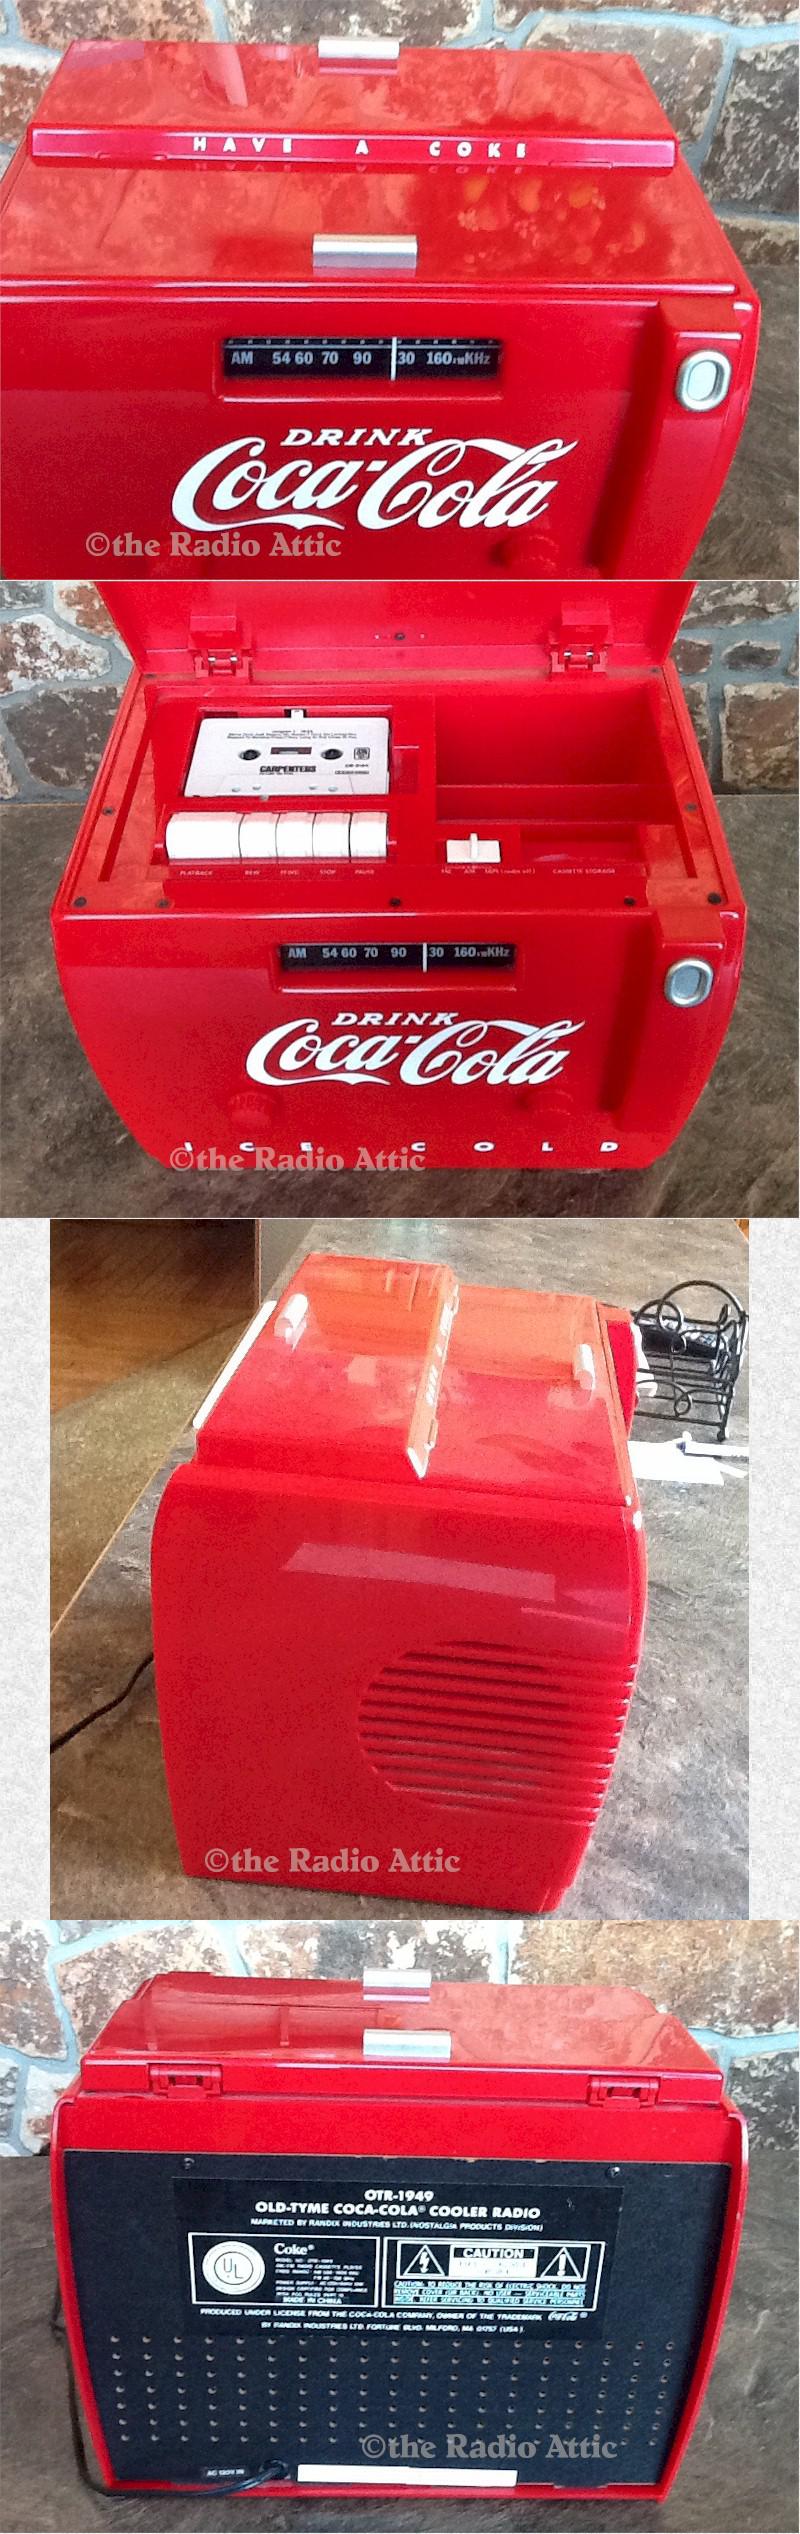 Old-Tyme OTR-1949 Coca-Cola Cooler